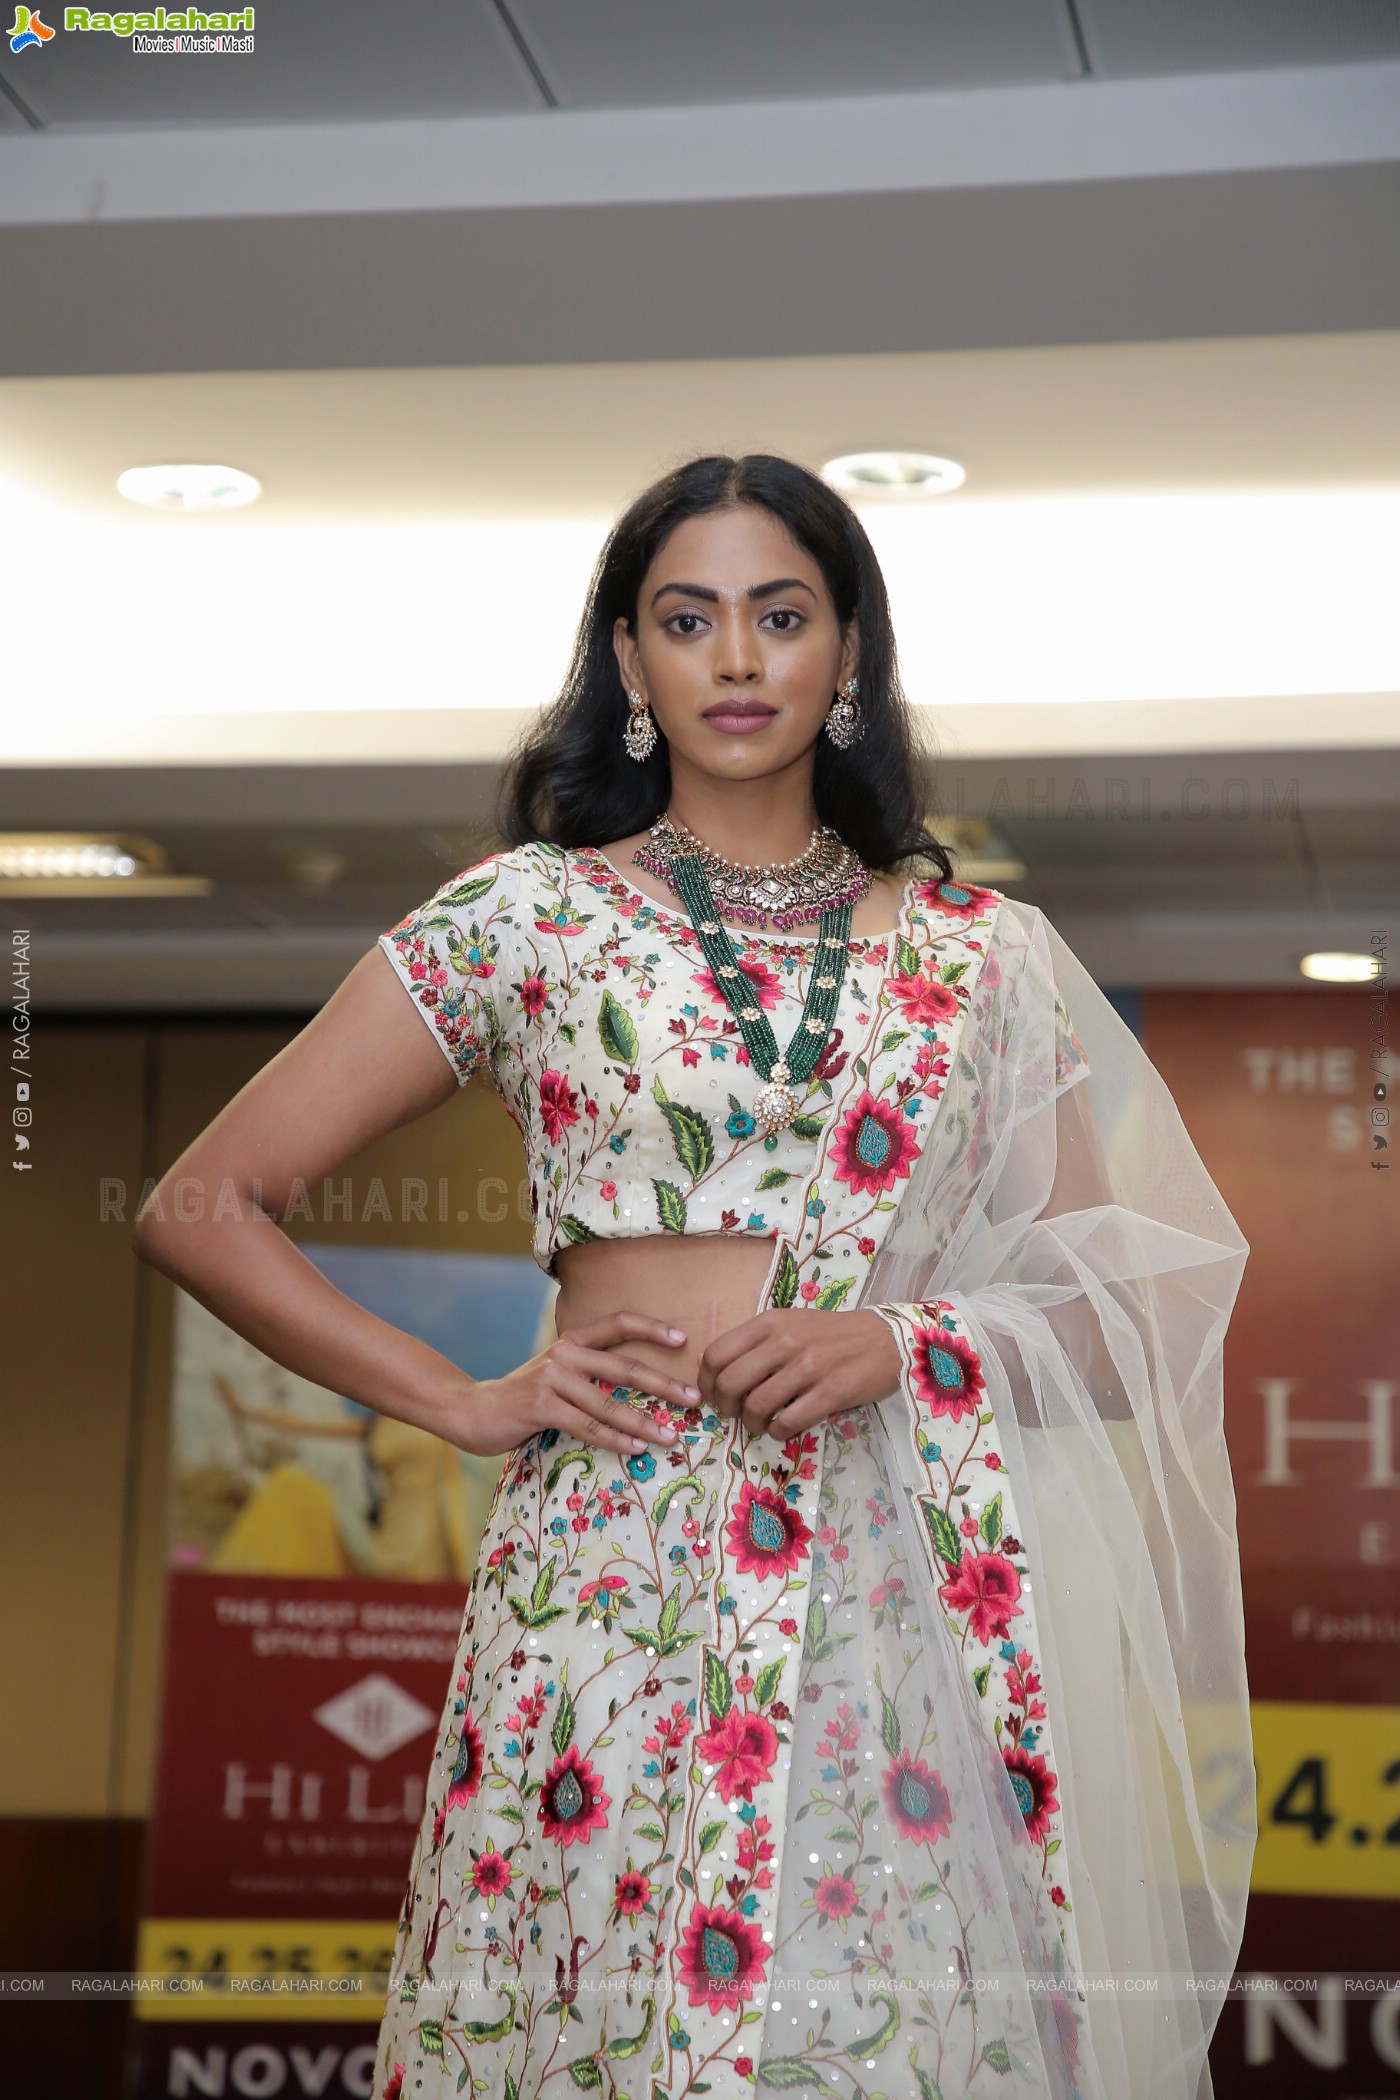 Hi Life Exhibition June 2022 Curtain Raiser and Fashion Showcase, Hyderabad